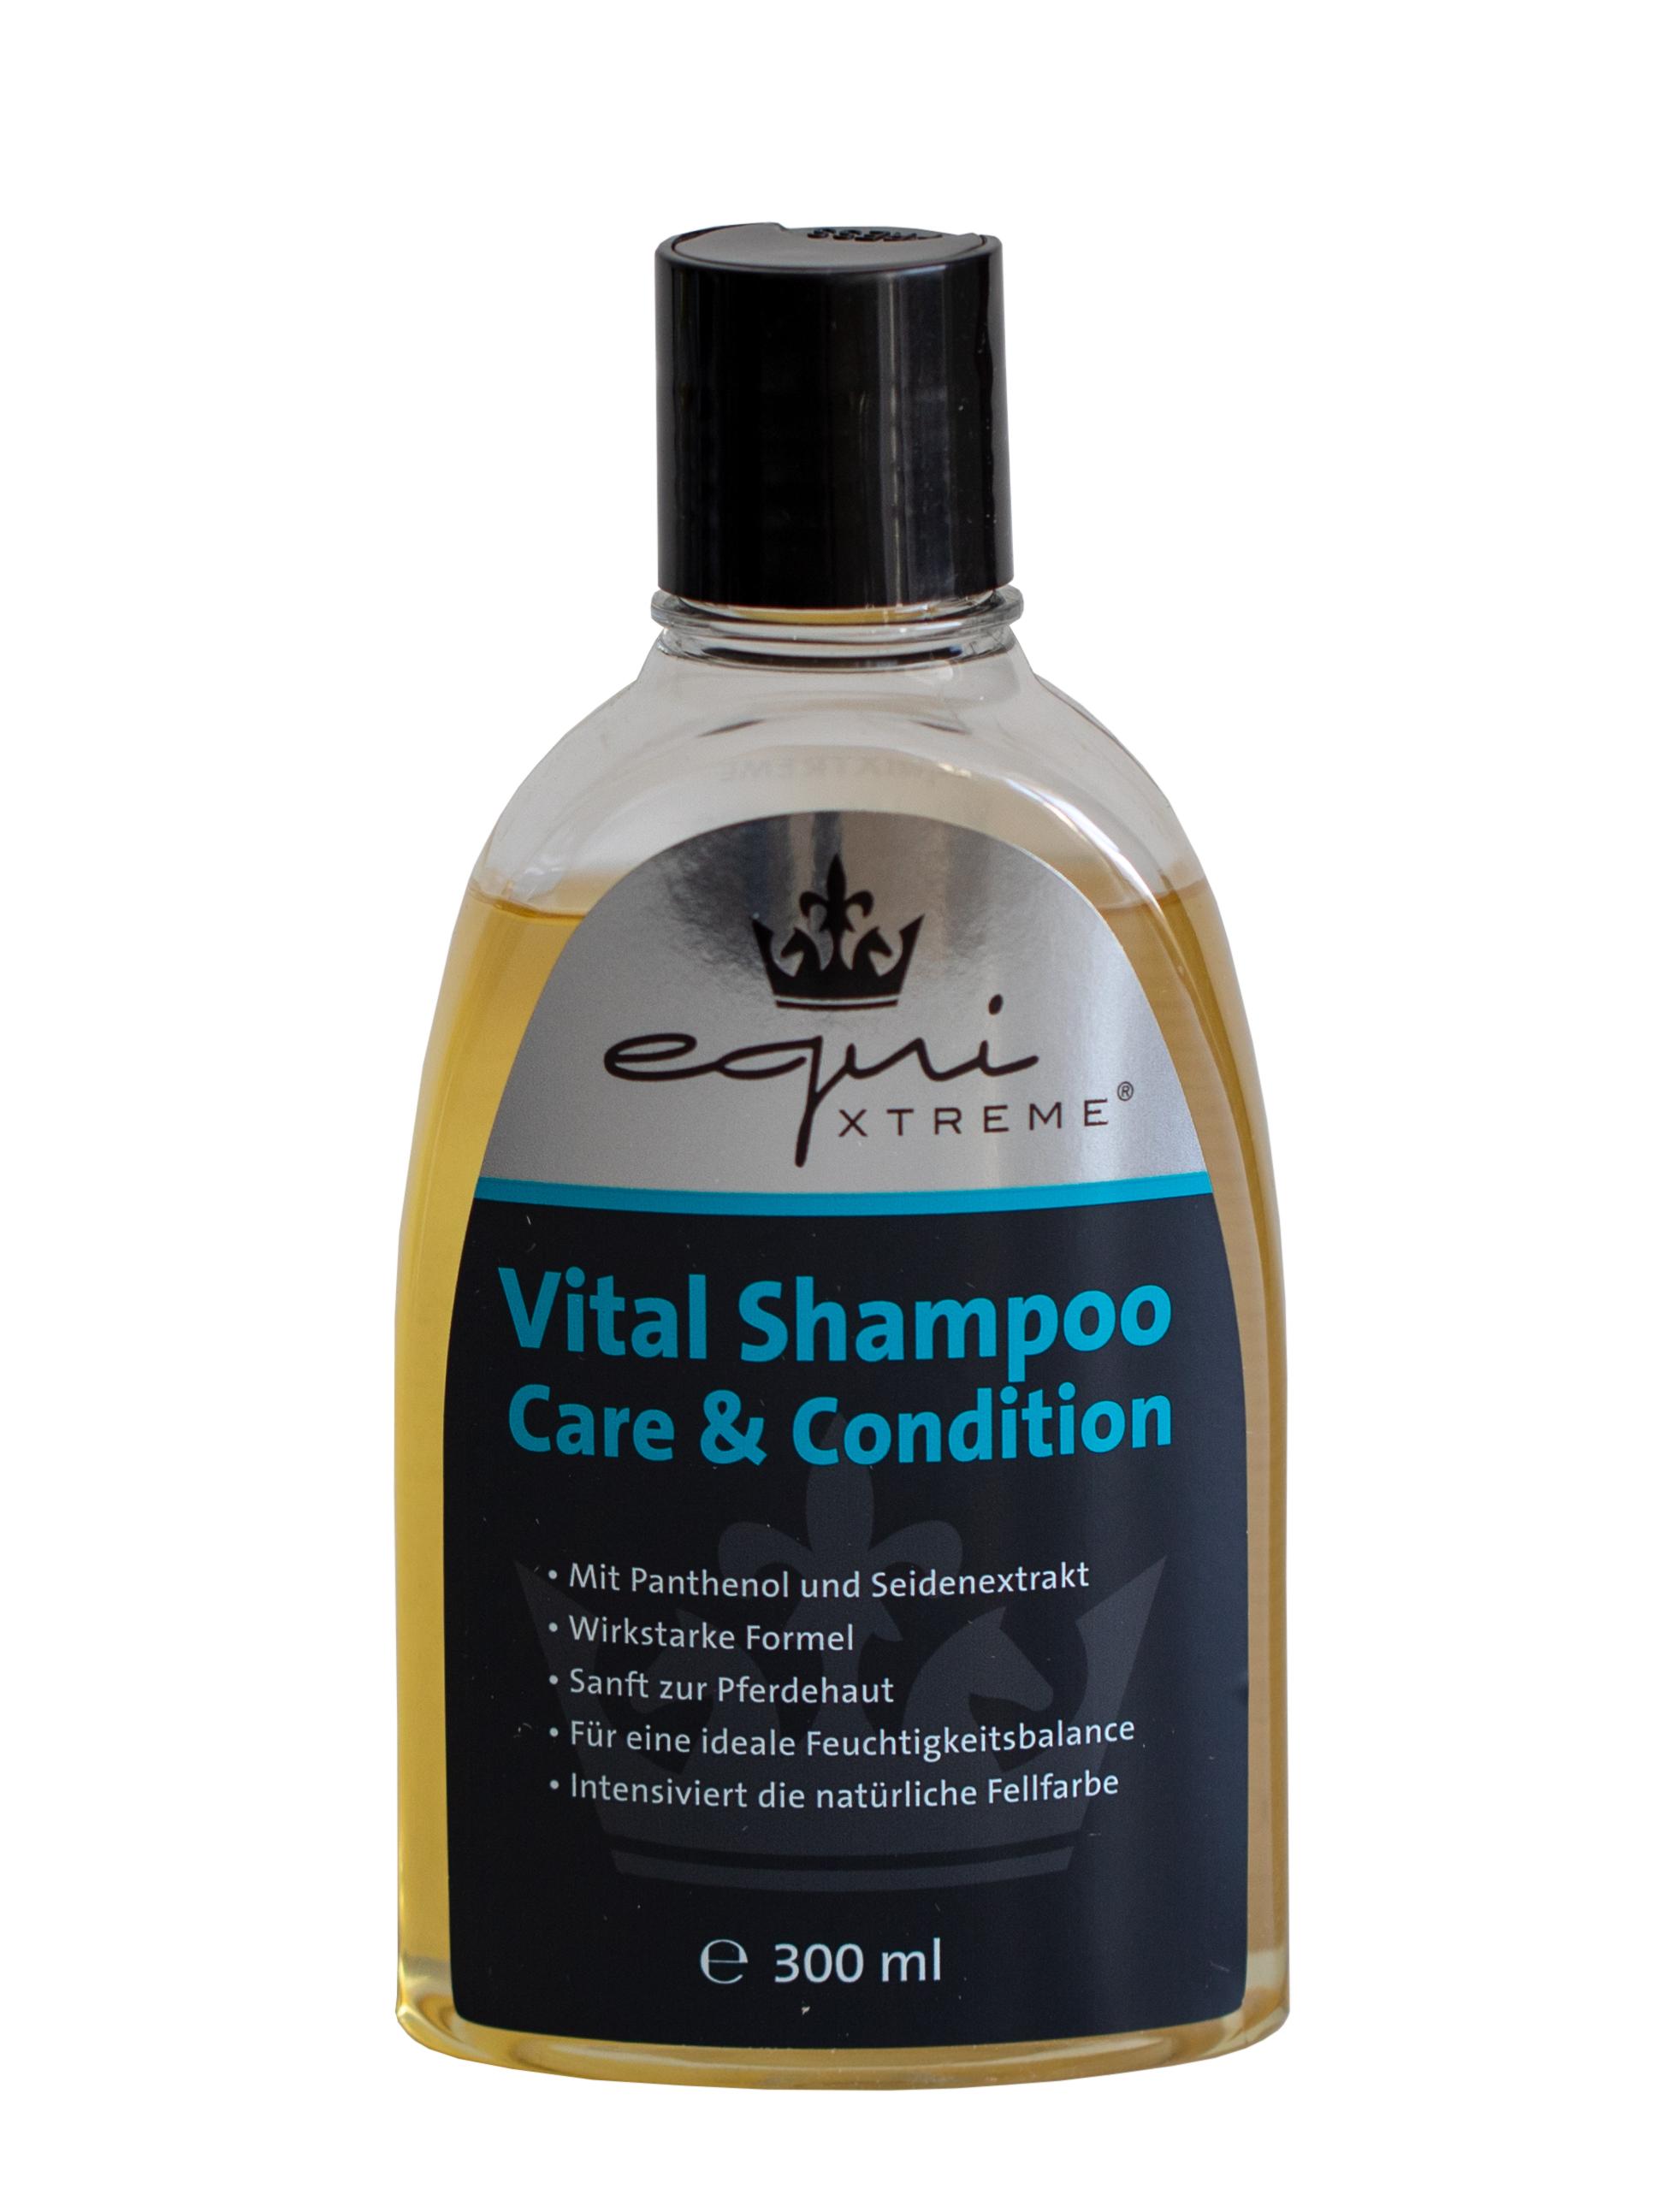 Lexa equiXTREME Vital Shampoo 300 ml Flasche